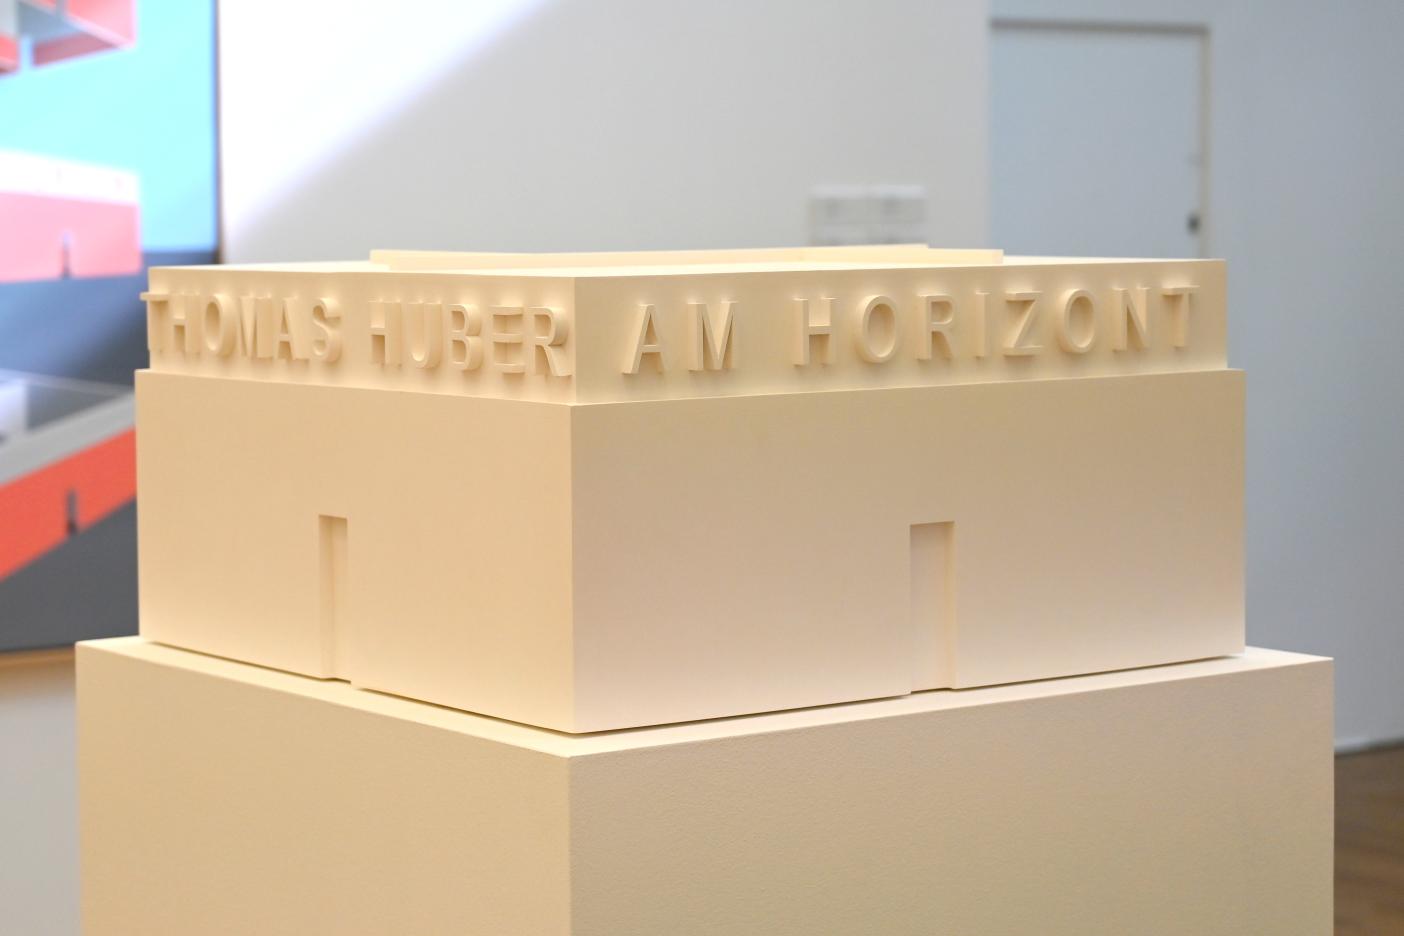 Thomas Huber (2016), Am Horizont 7, Bonn, Kunstmuseum Bonn, Saal 3, 2016, Bild 3/4